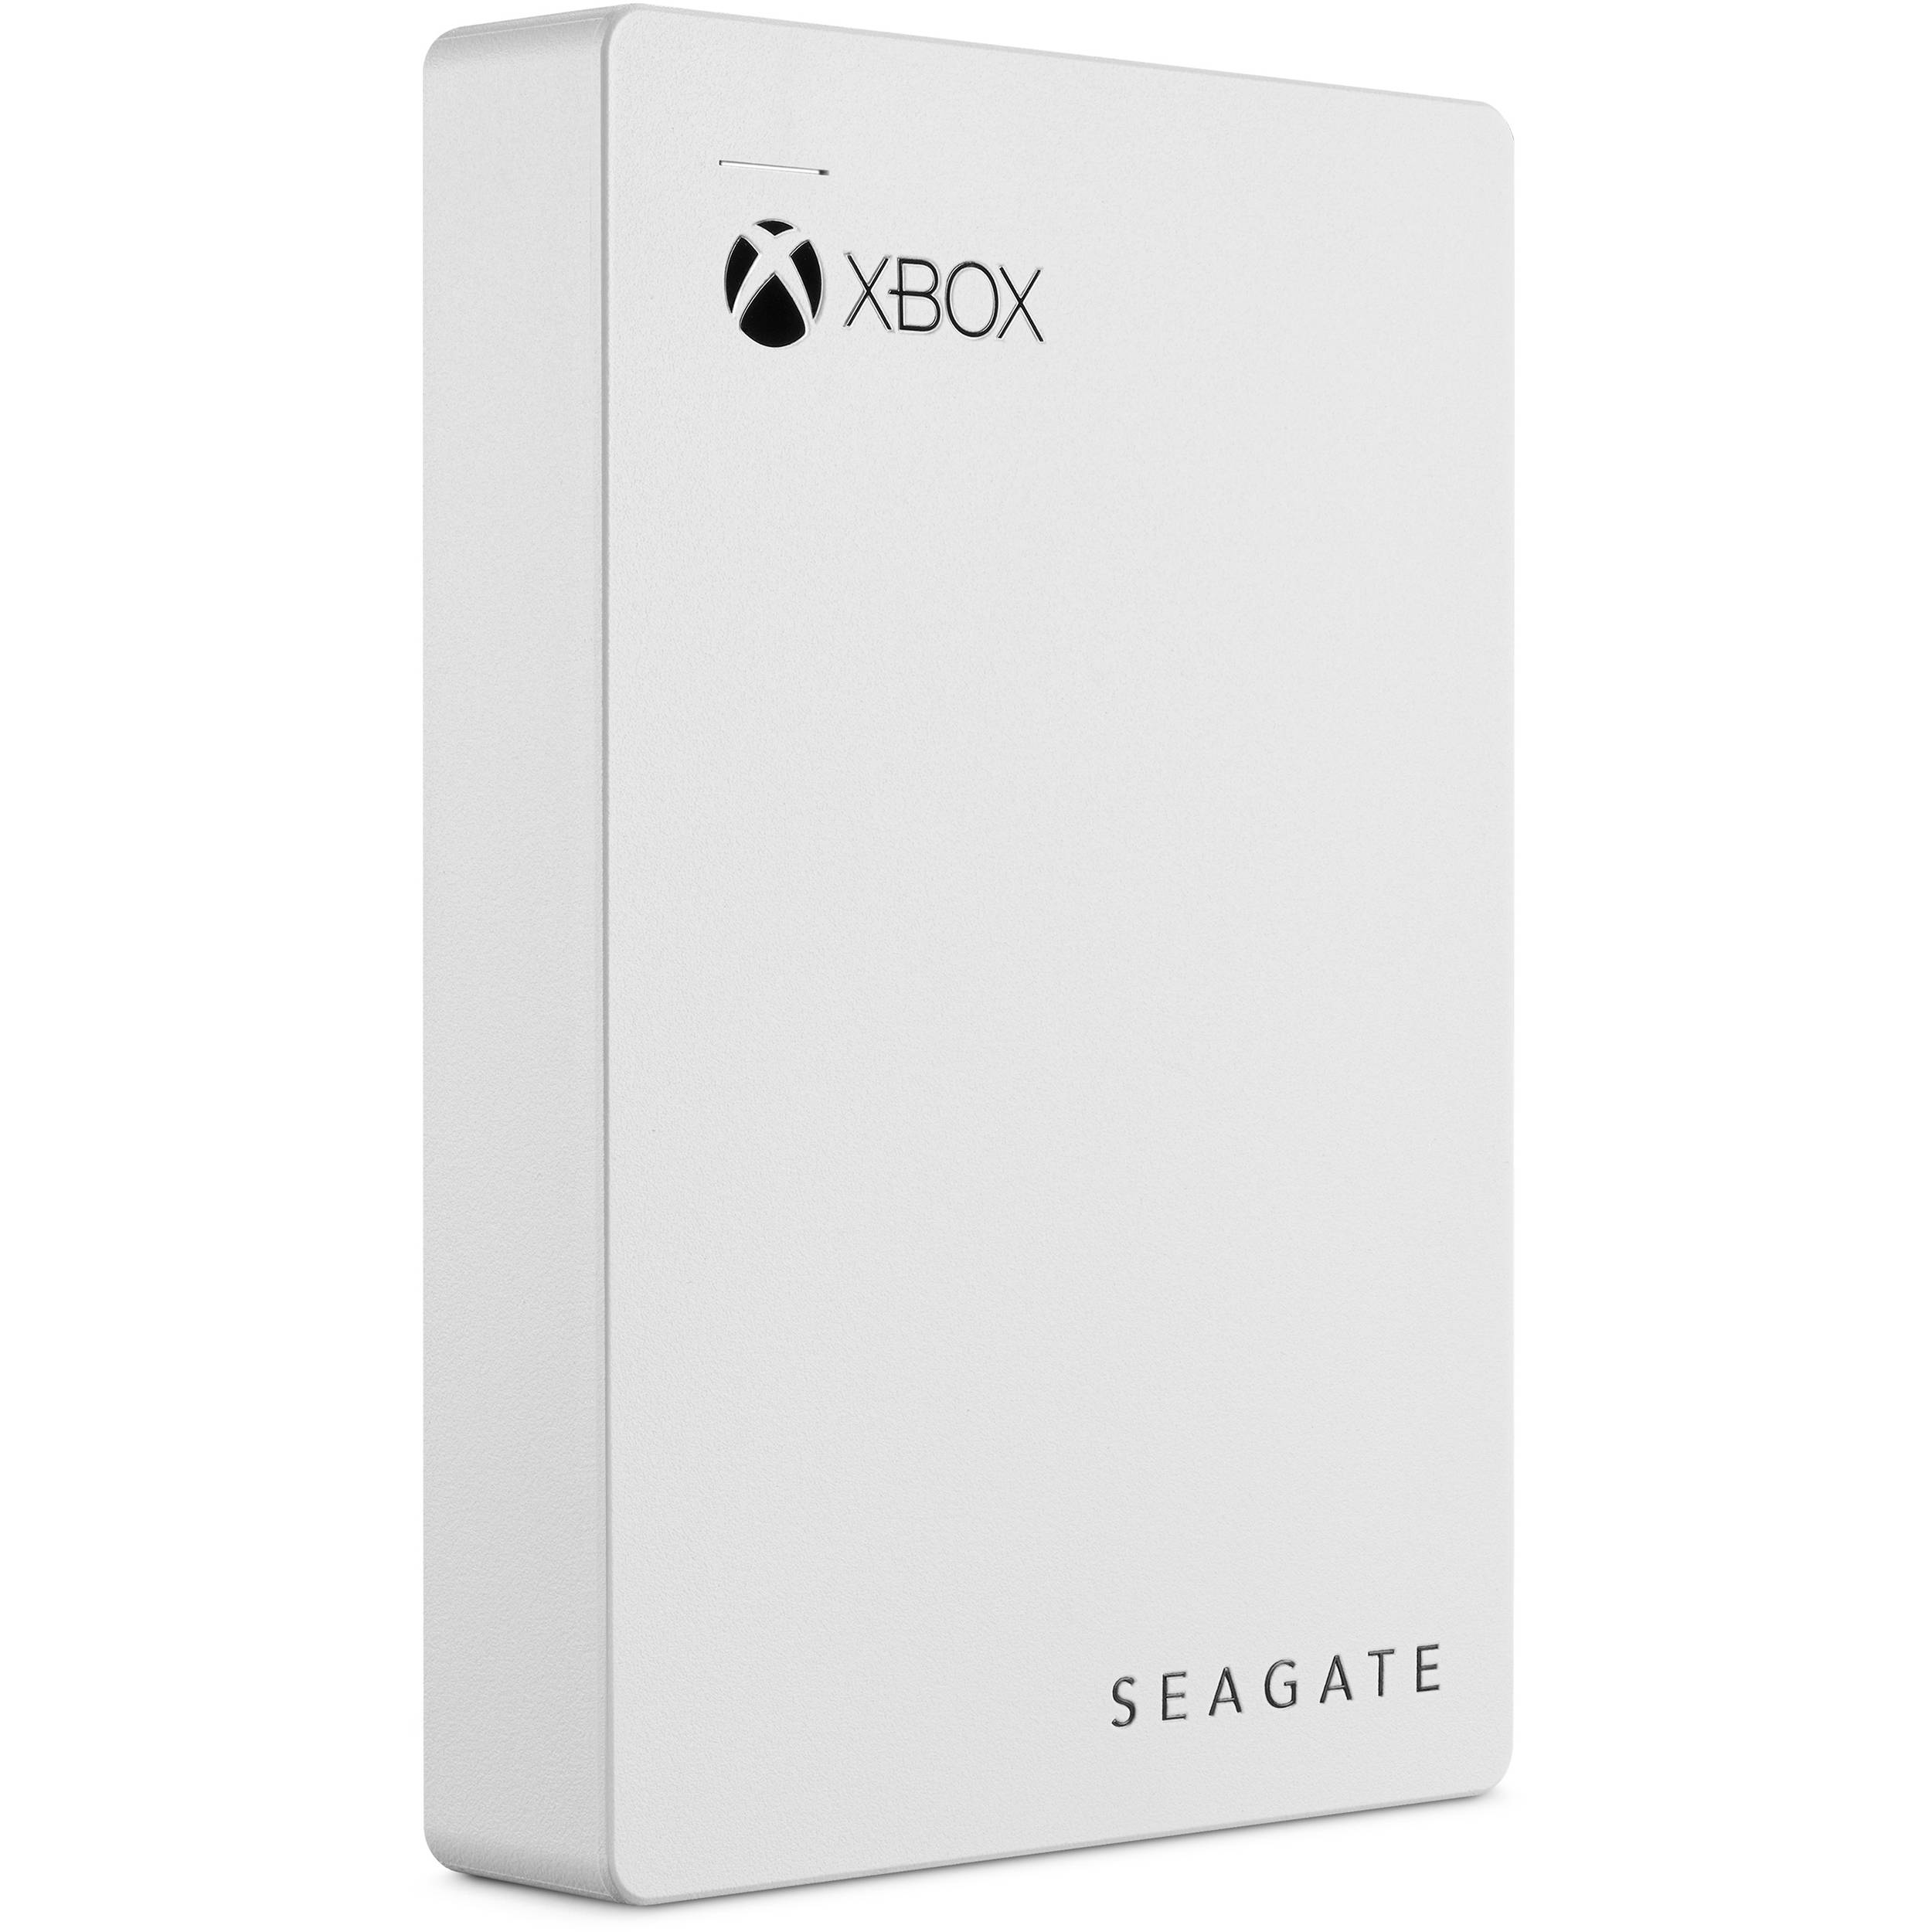 seagate hard drive xbox one